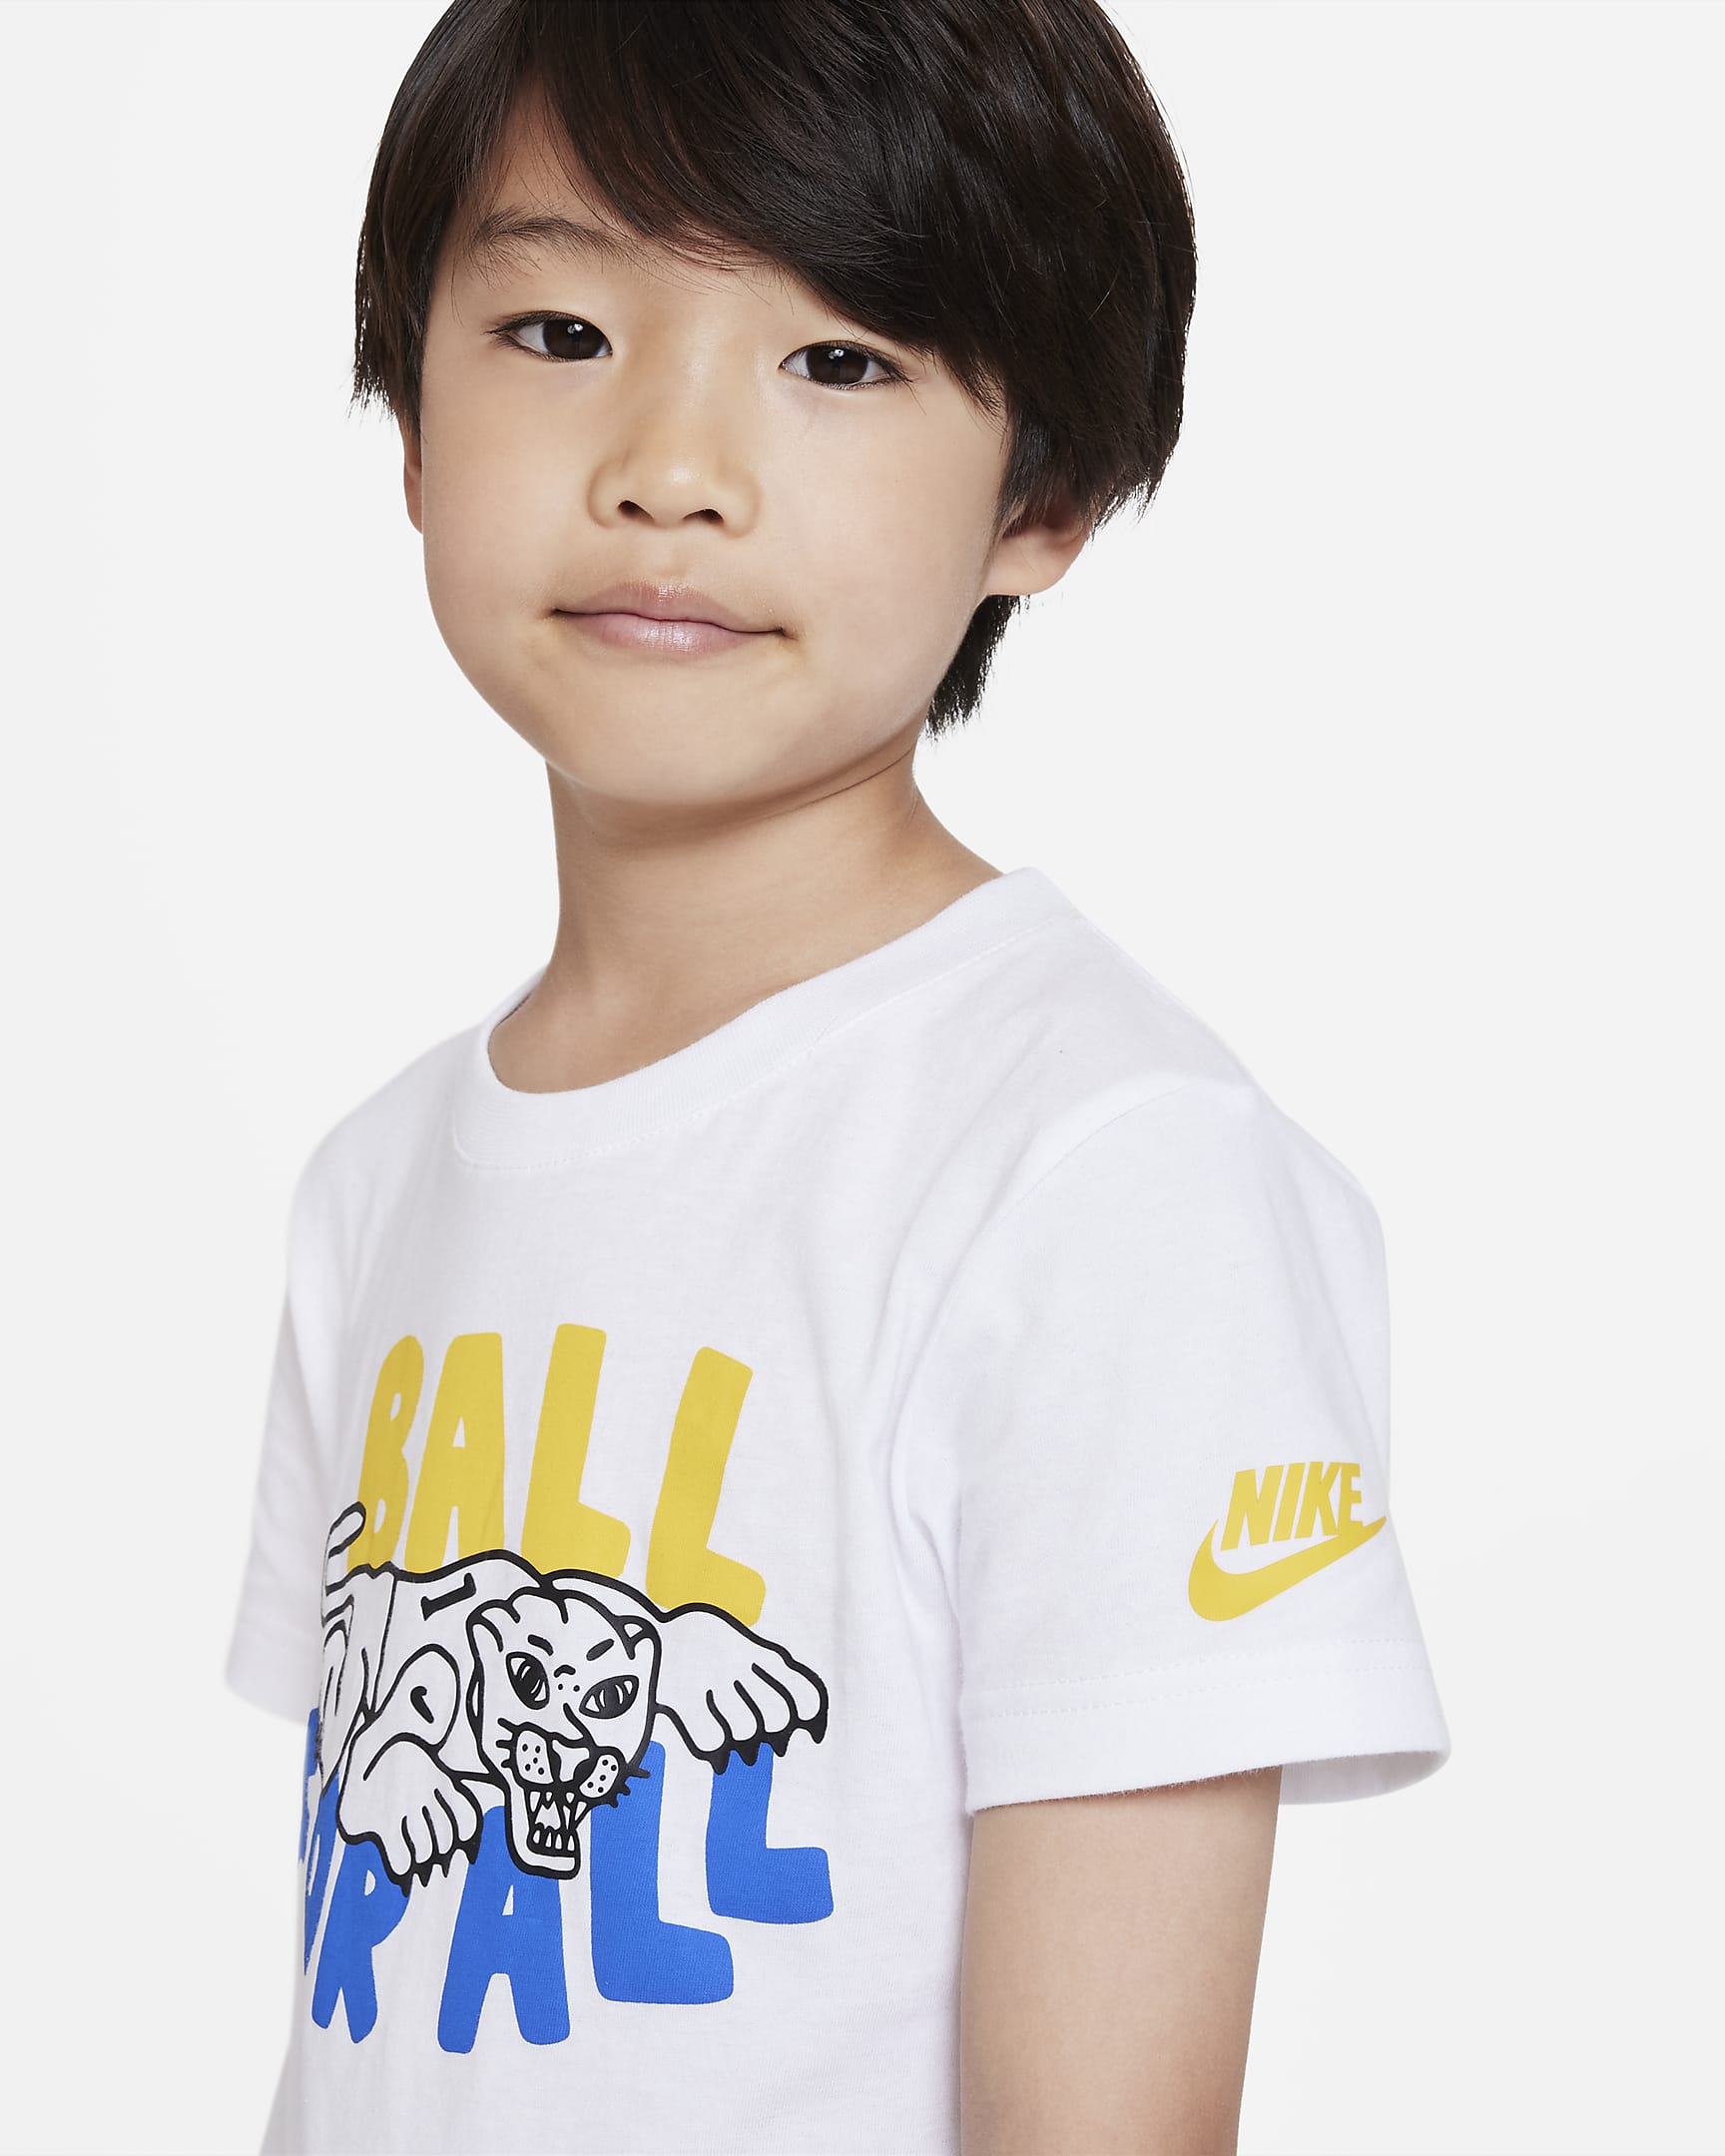 Nike Ball For All Tee Little Kids' T-Shirt. Nike.com